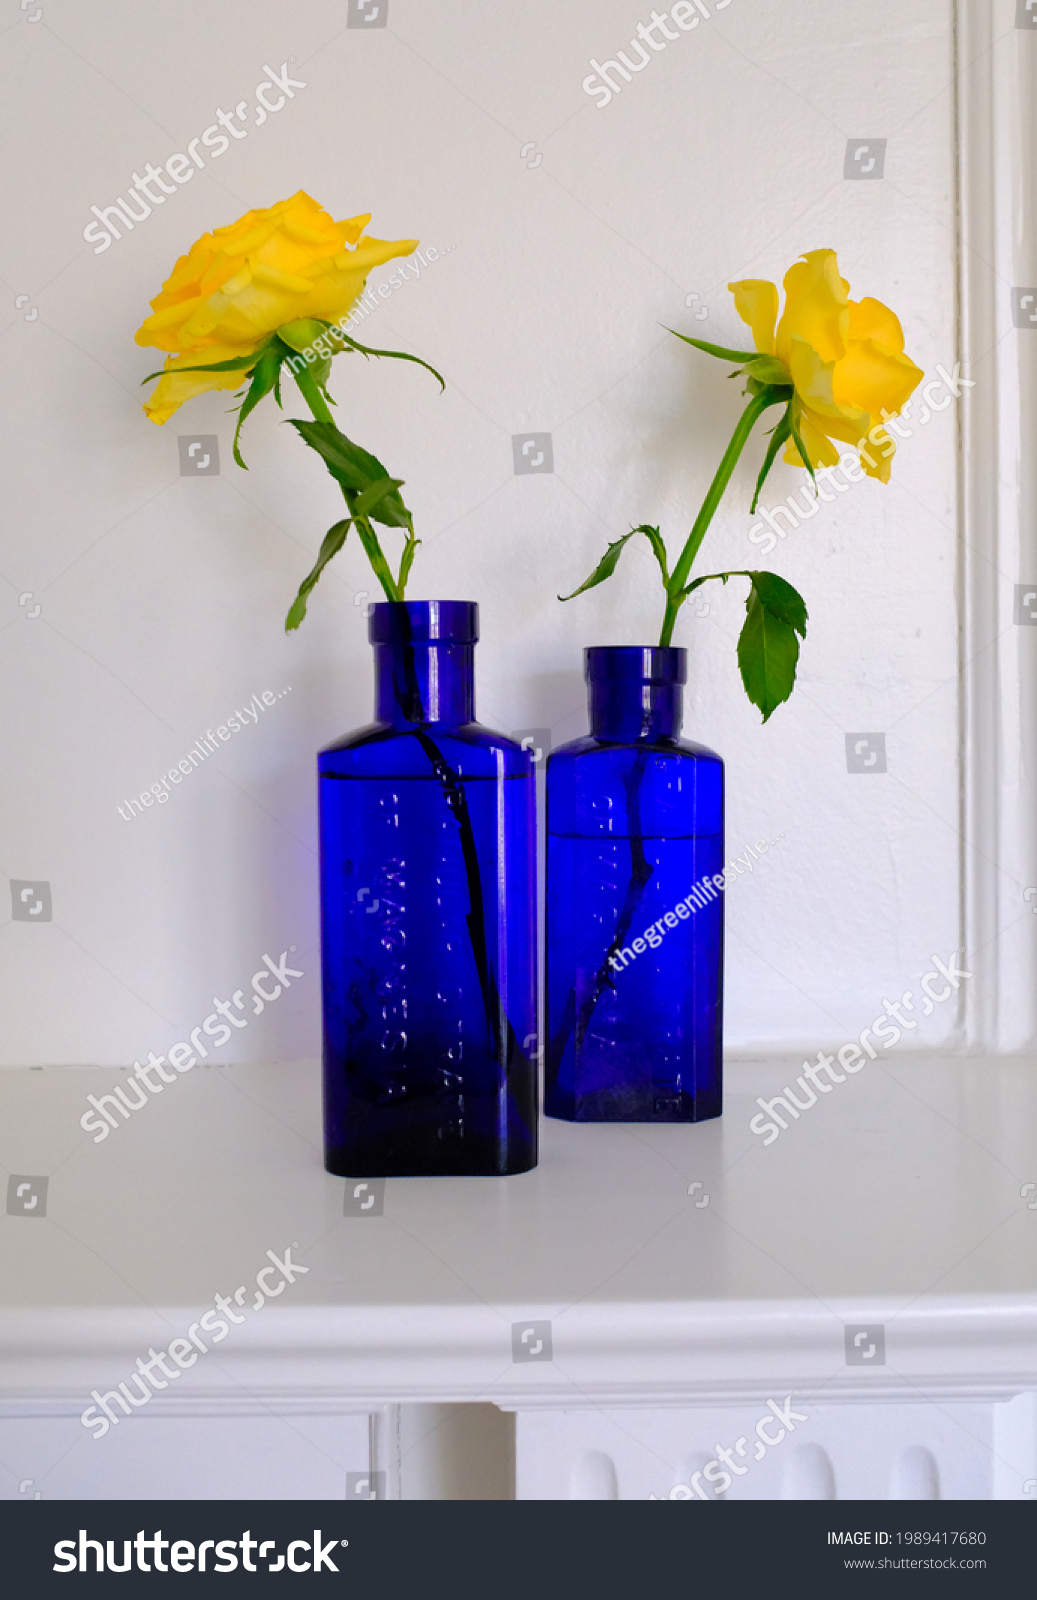 Yellow roses in cobalt blue victorian medicine bottles #1989417680